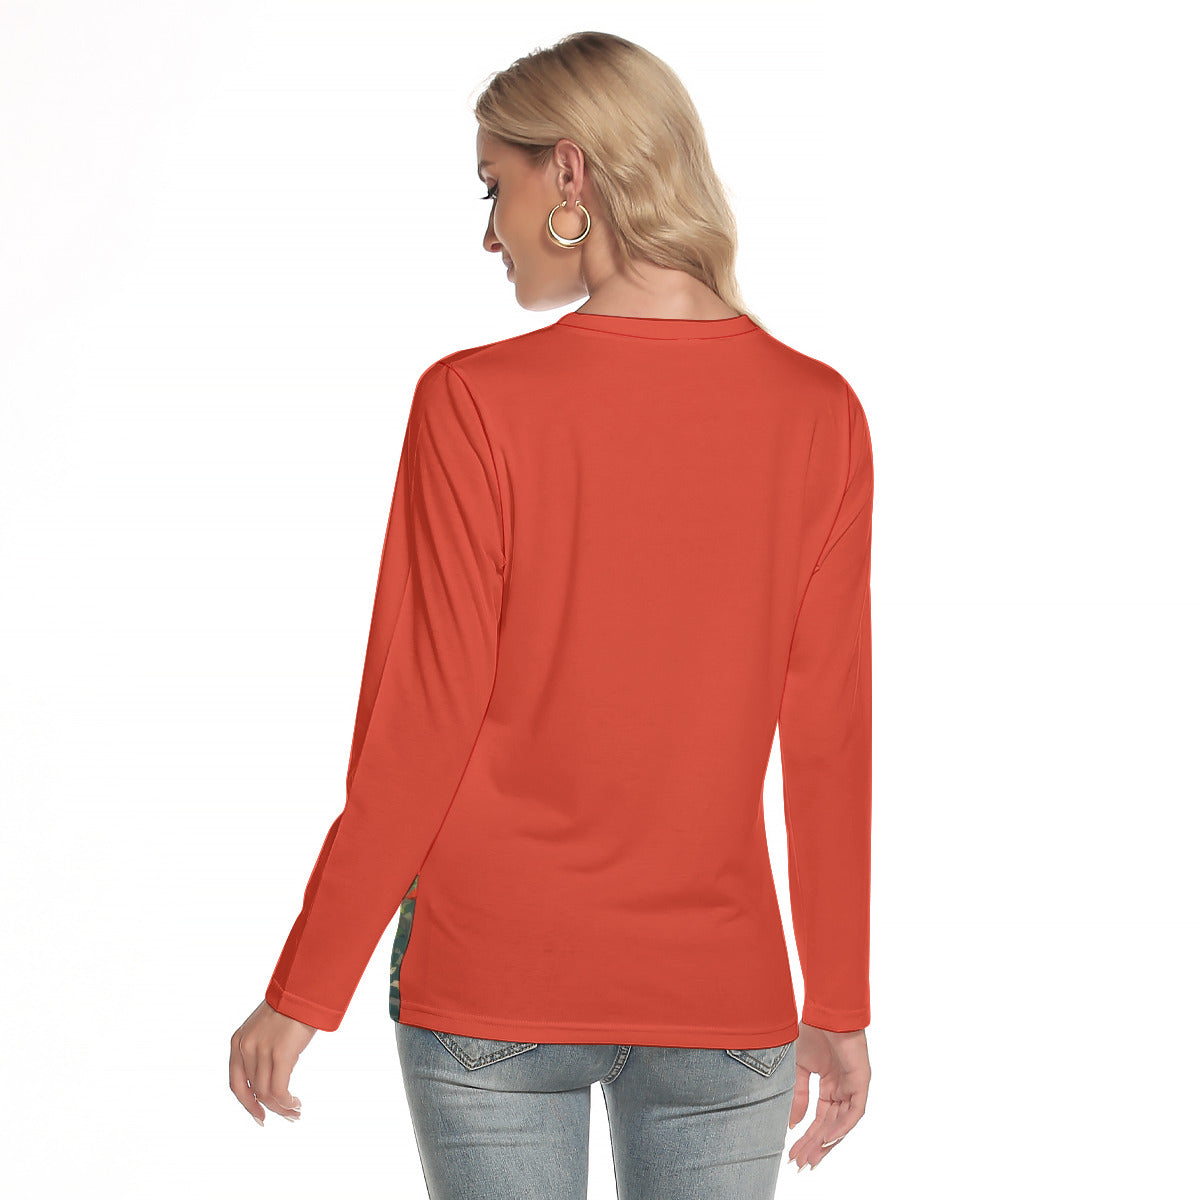 Fantasy 176 -- Women's O-neck Long Sleeve T-shirt